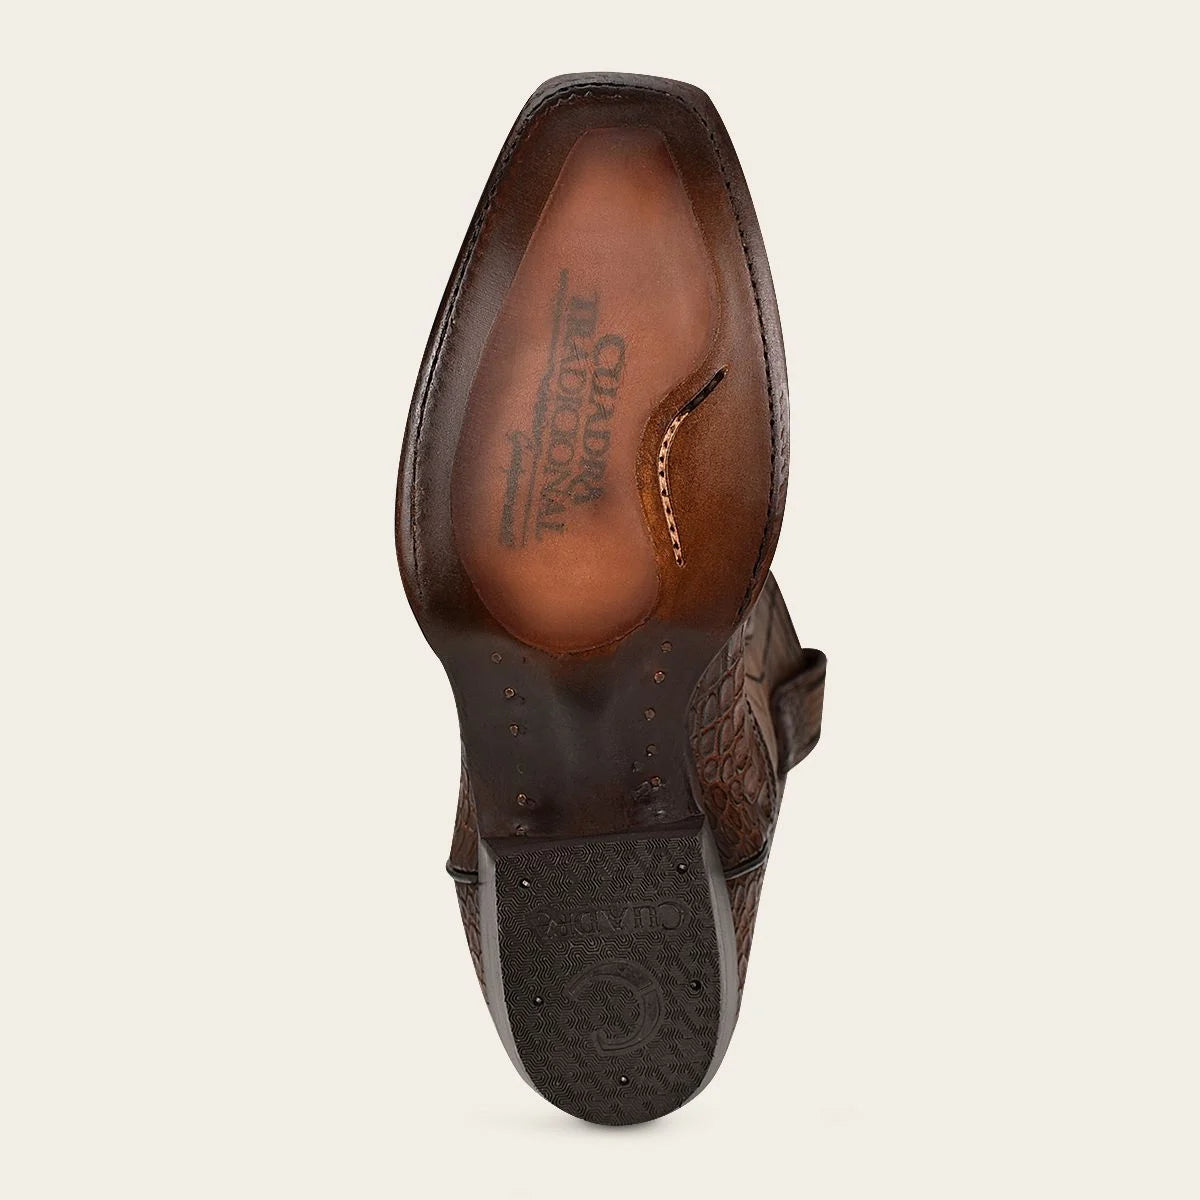 leather sole, enhanced with a TPU graft